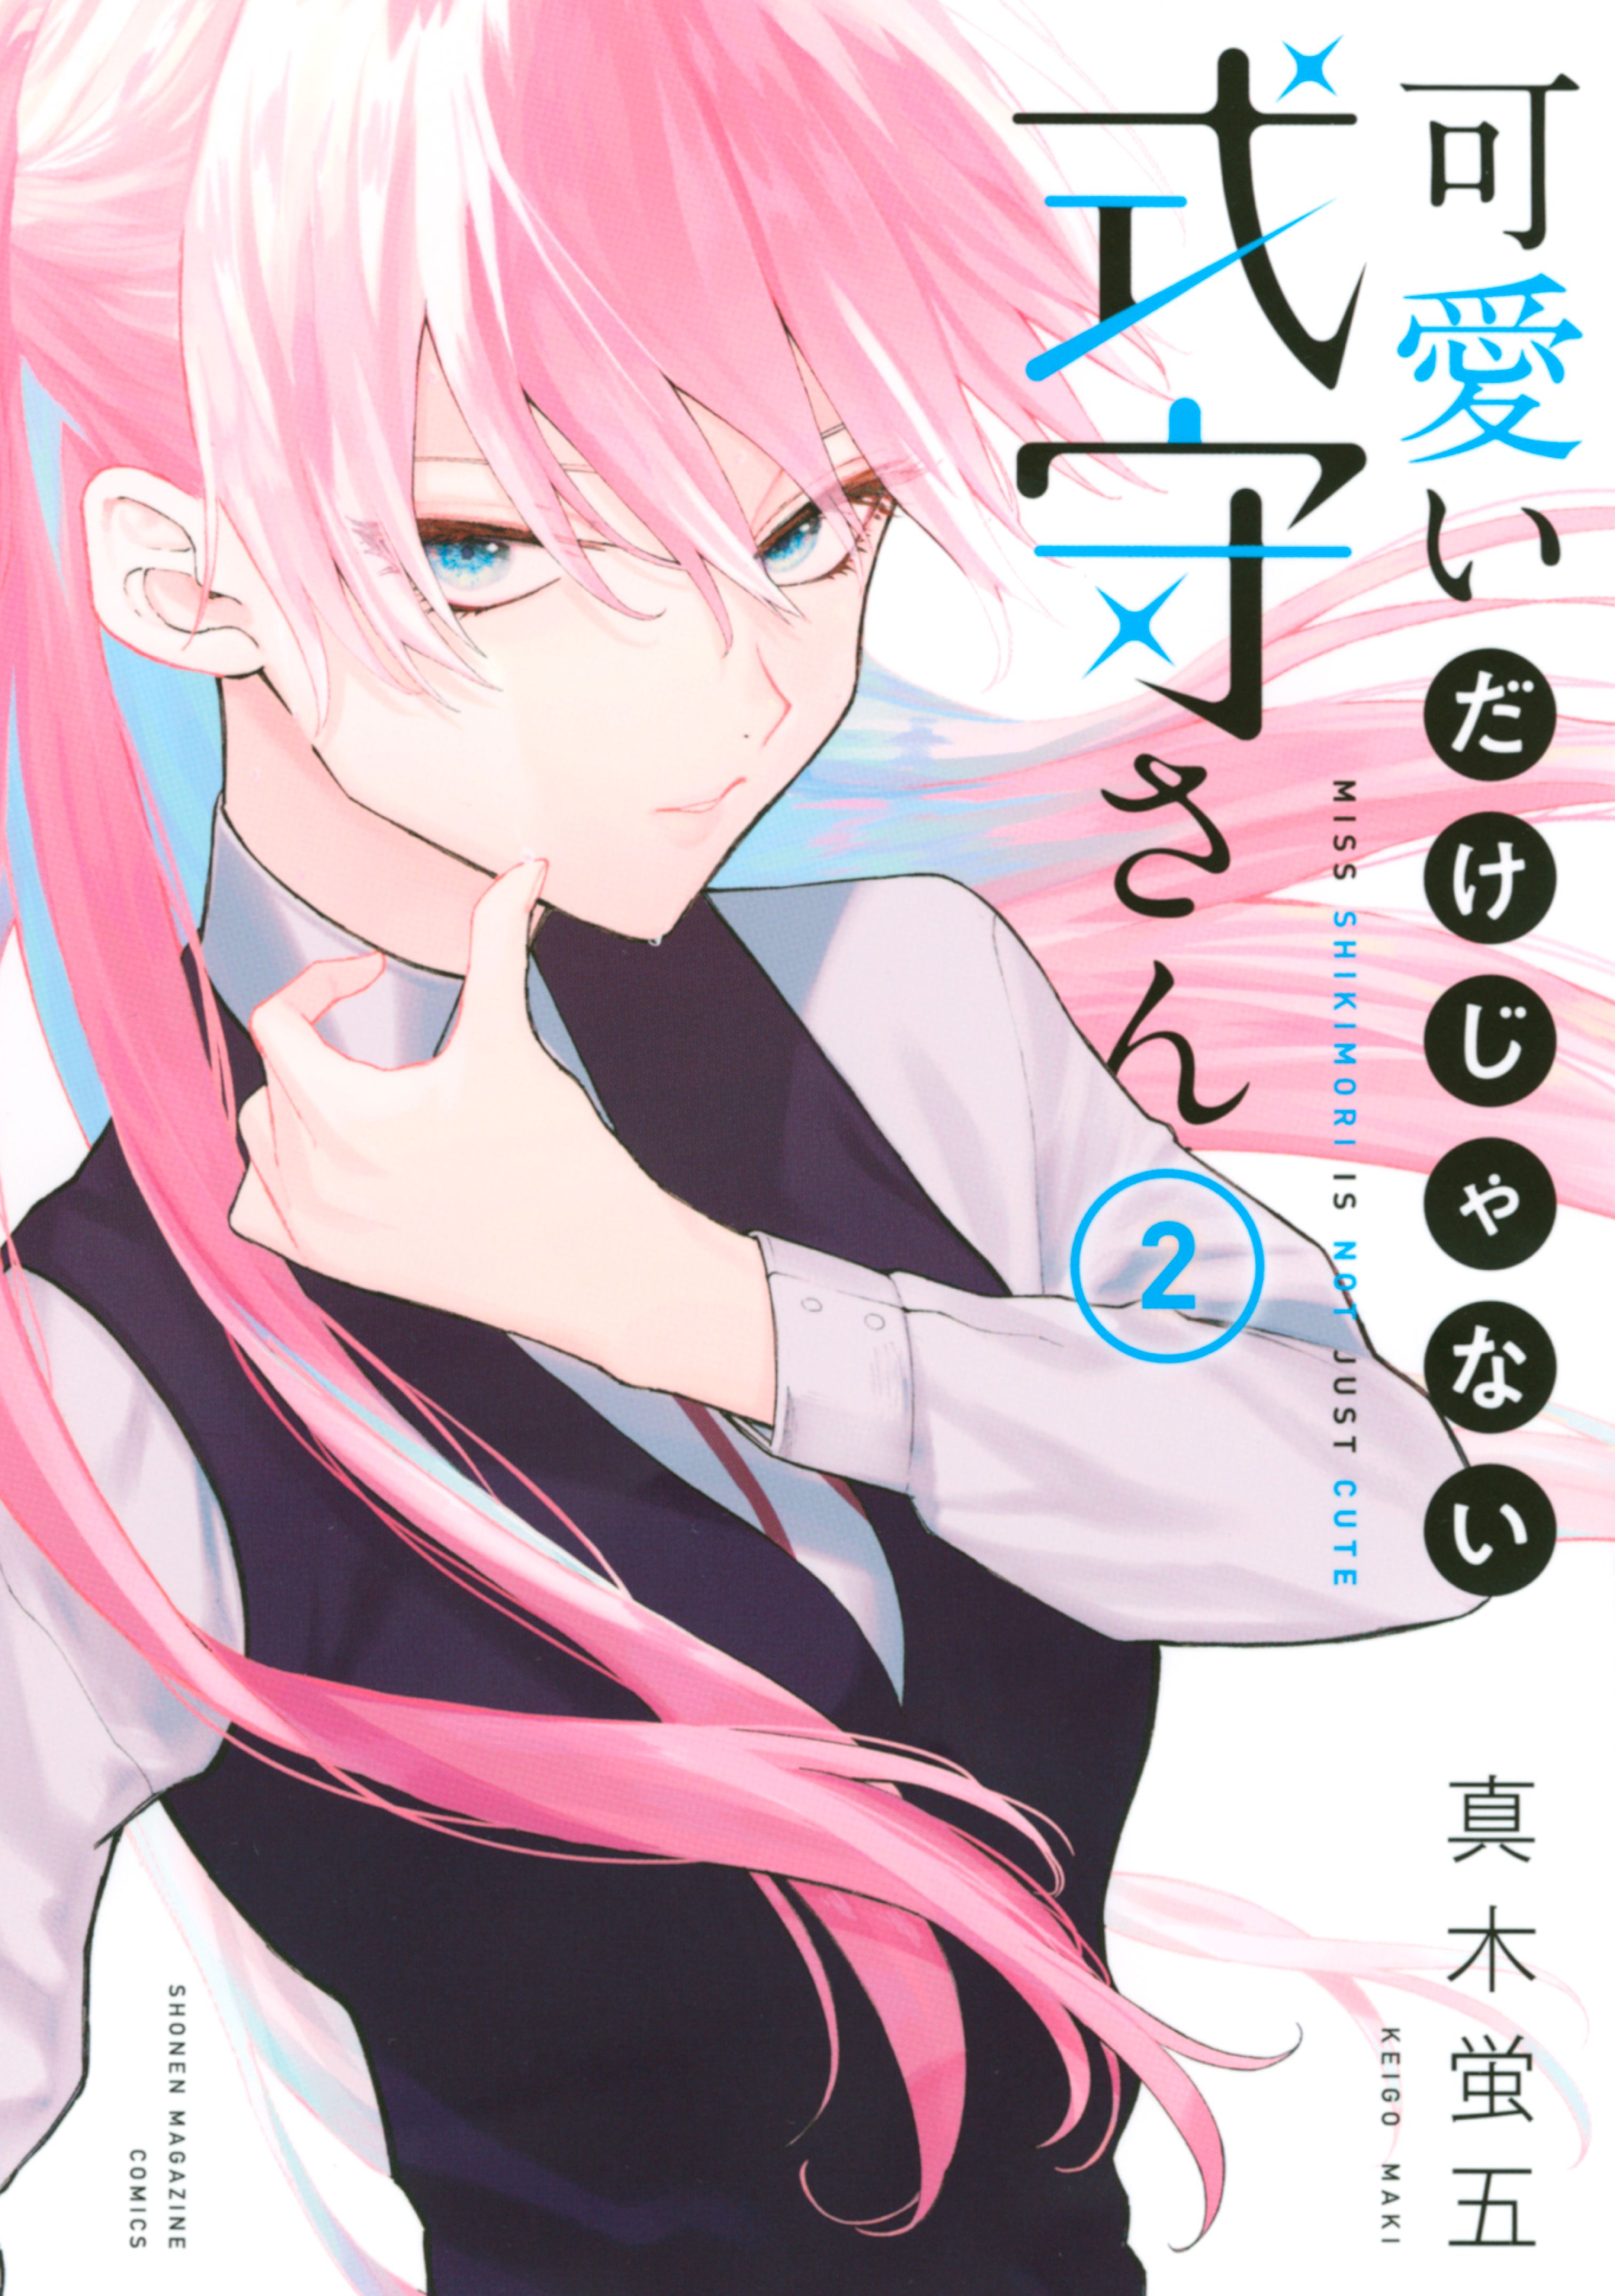 Read Kawaii dake ja Nai Shikimori-san Manga Chapter 92 in English Free  Online